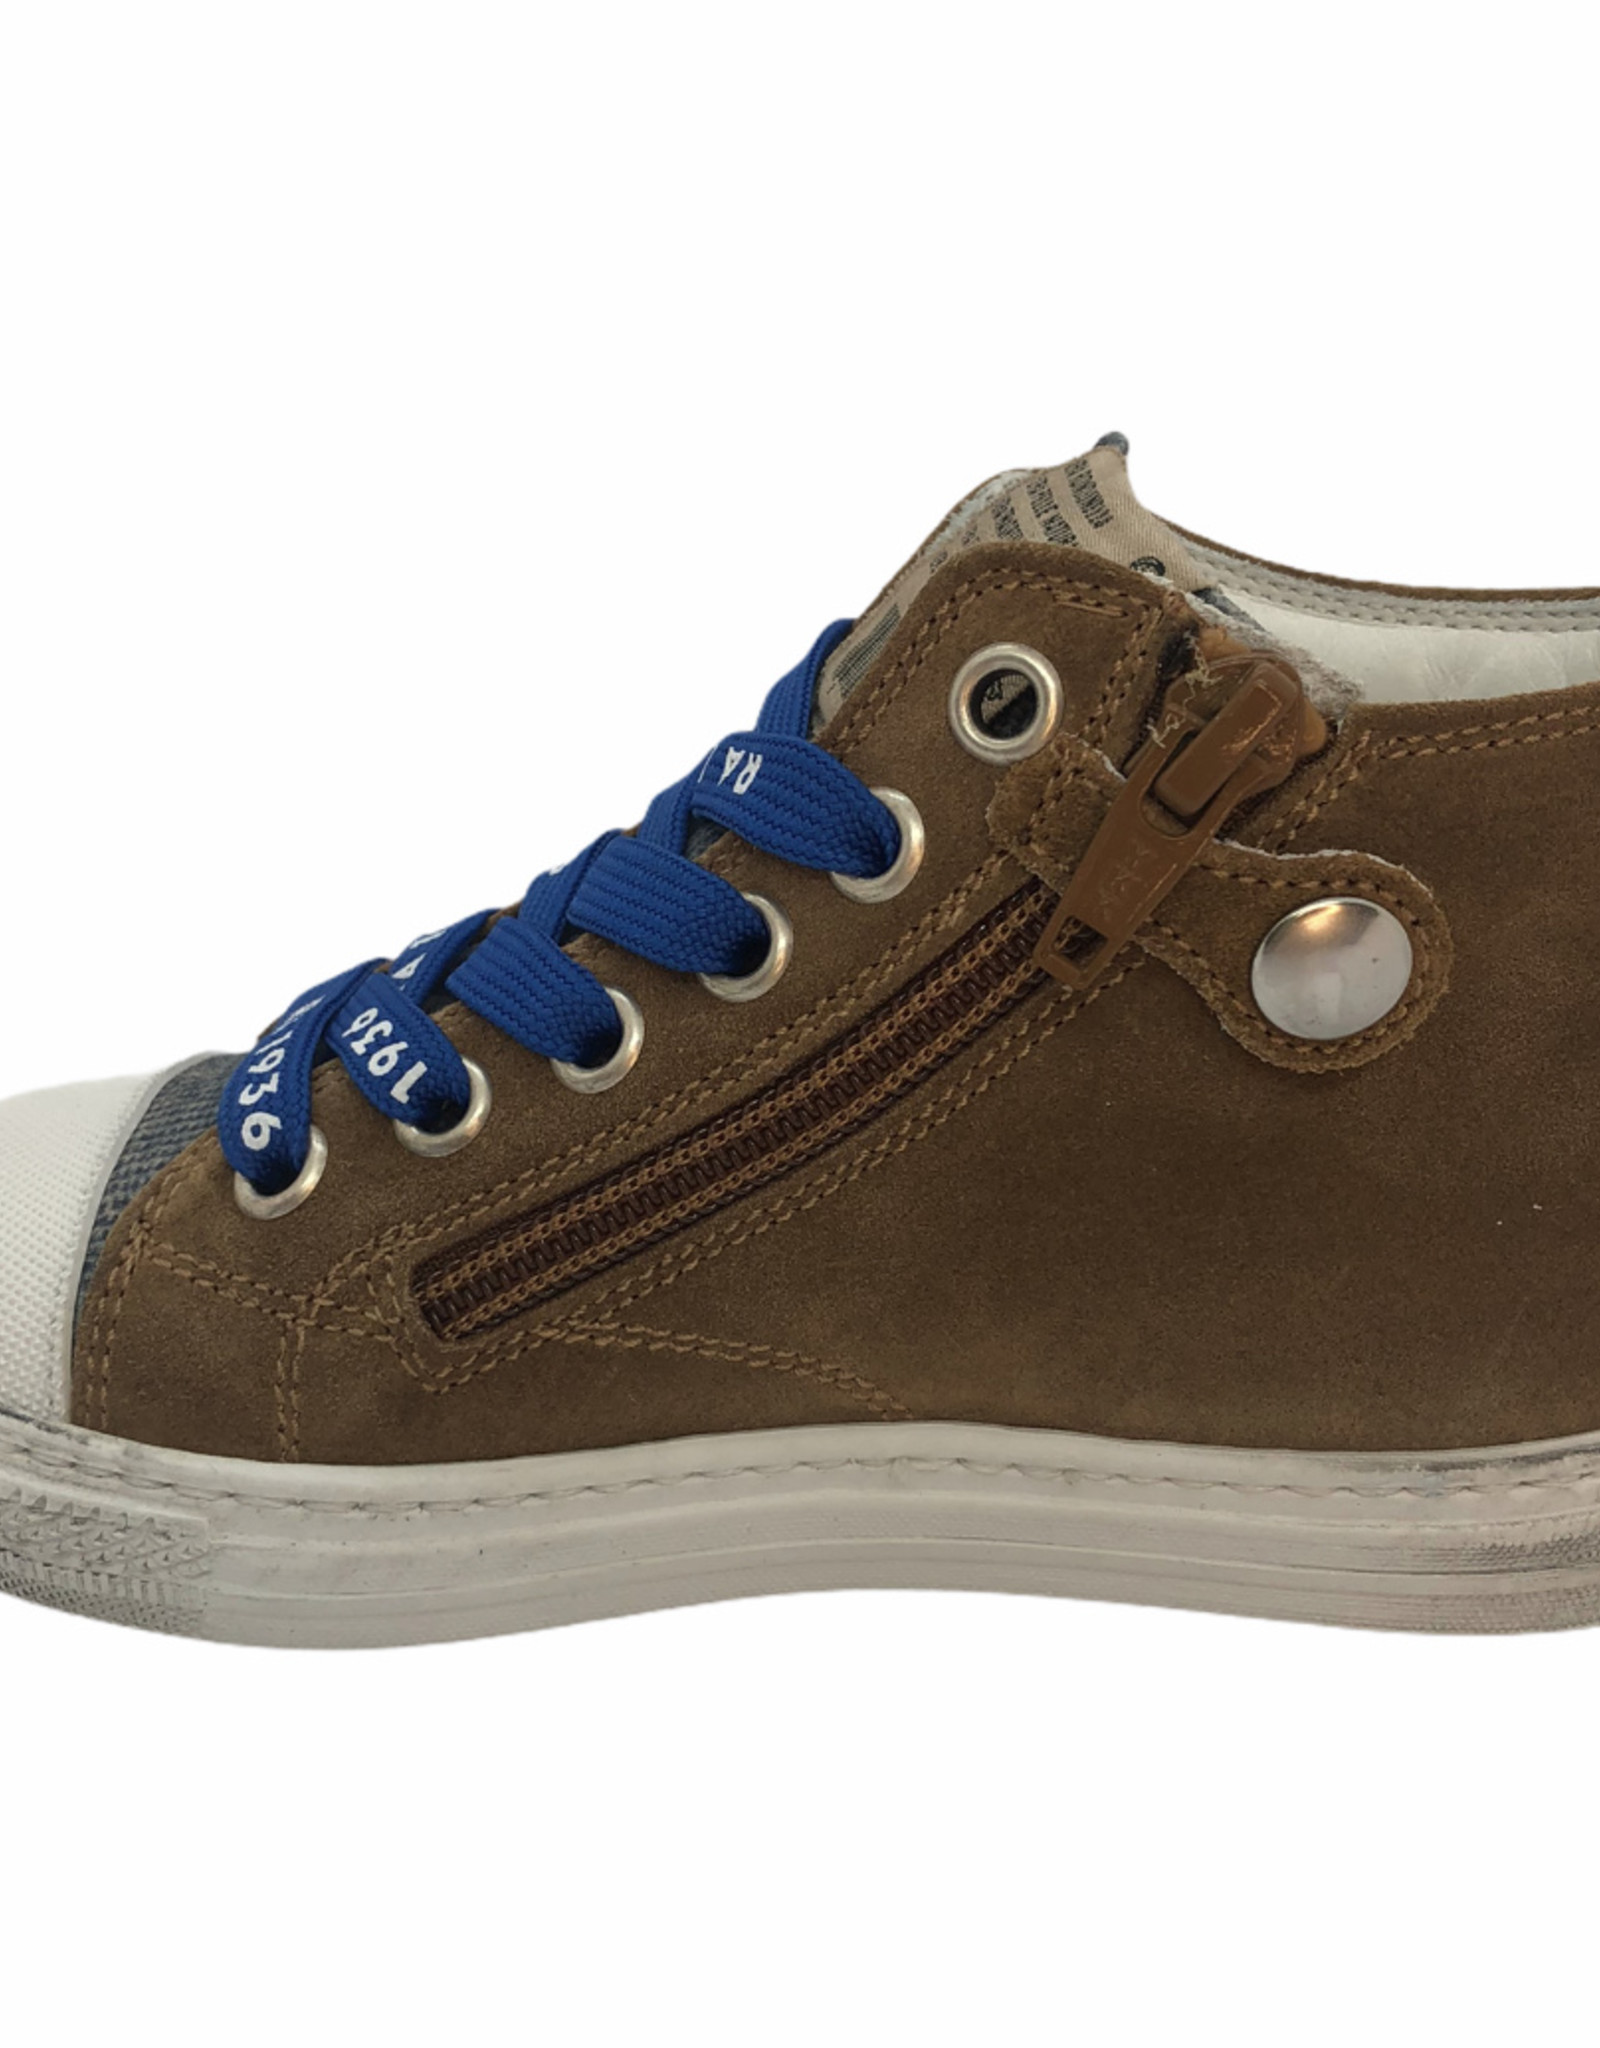 Rondinella 11840-1 hoge sneaker bruin blauw